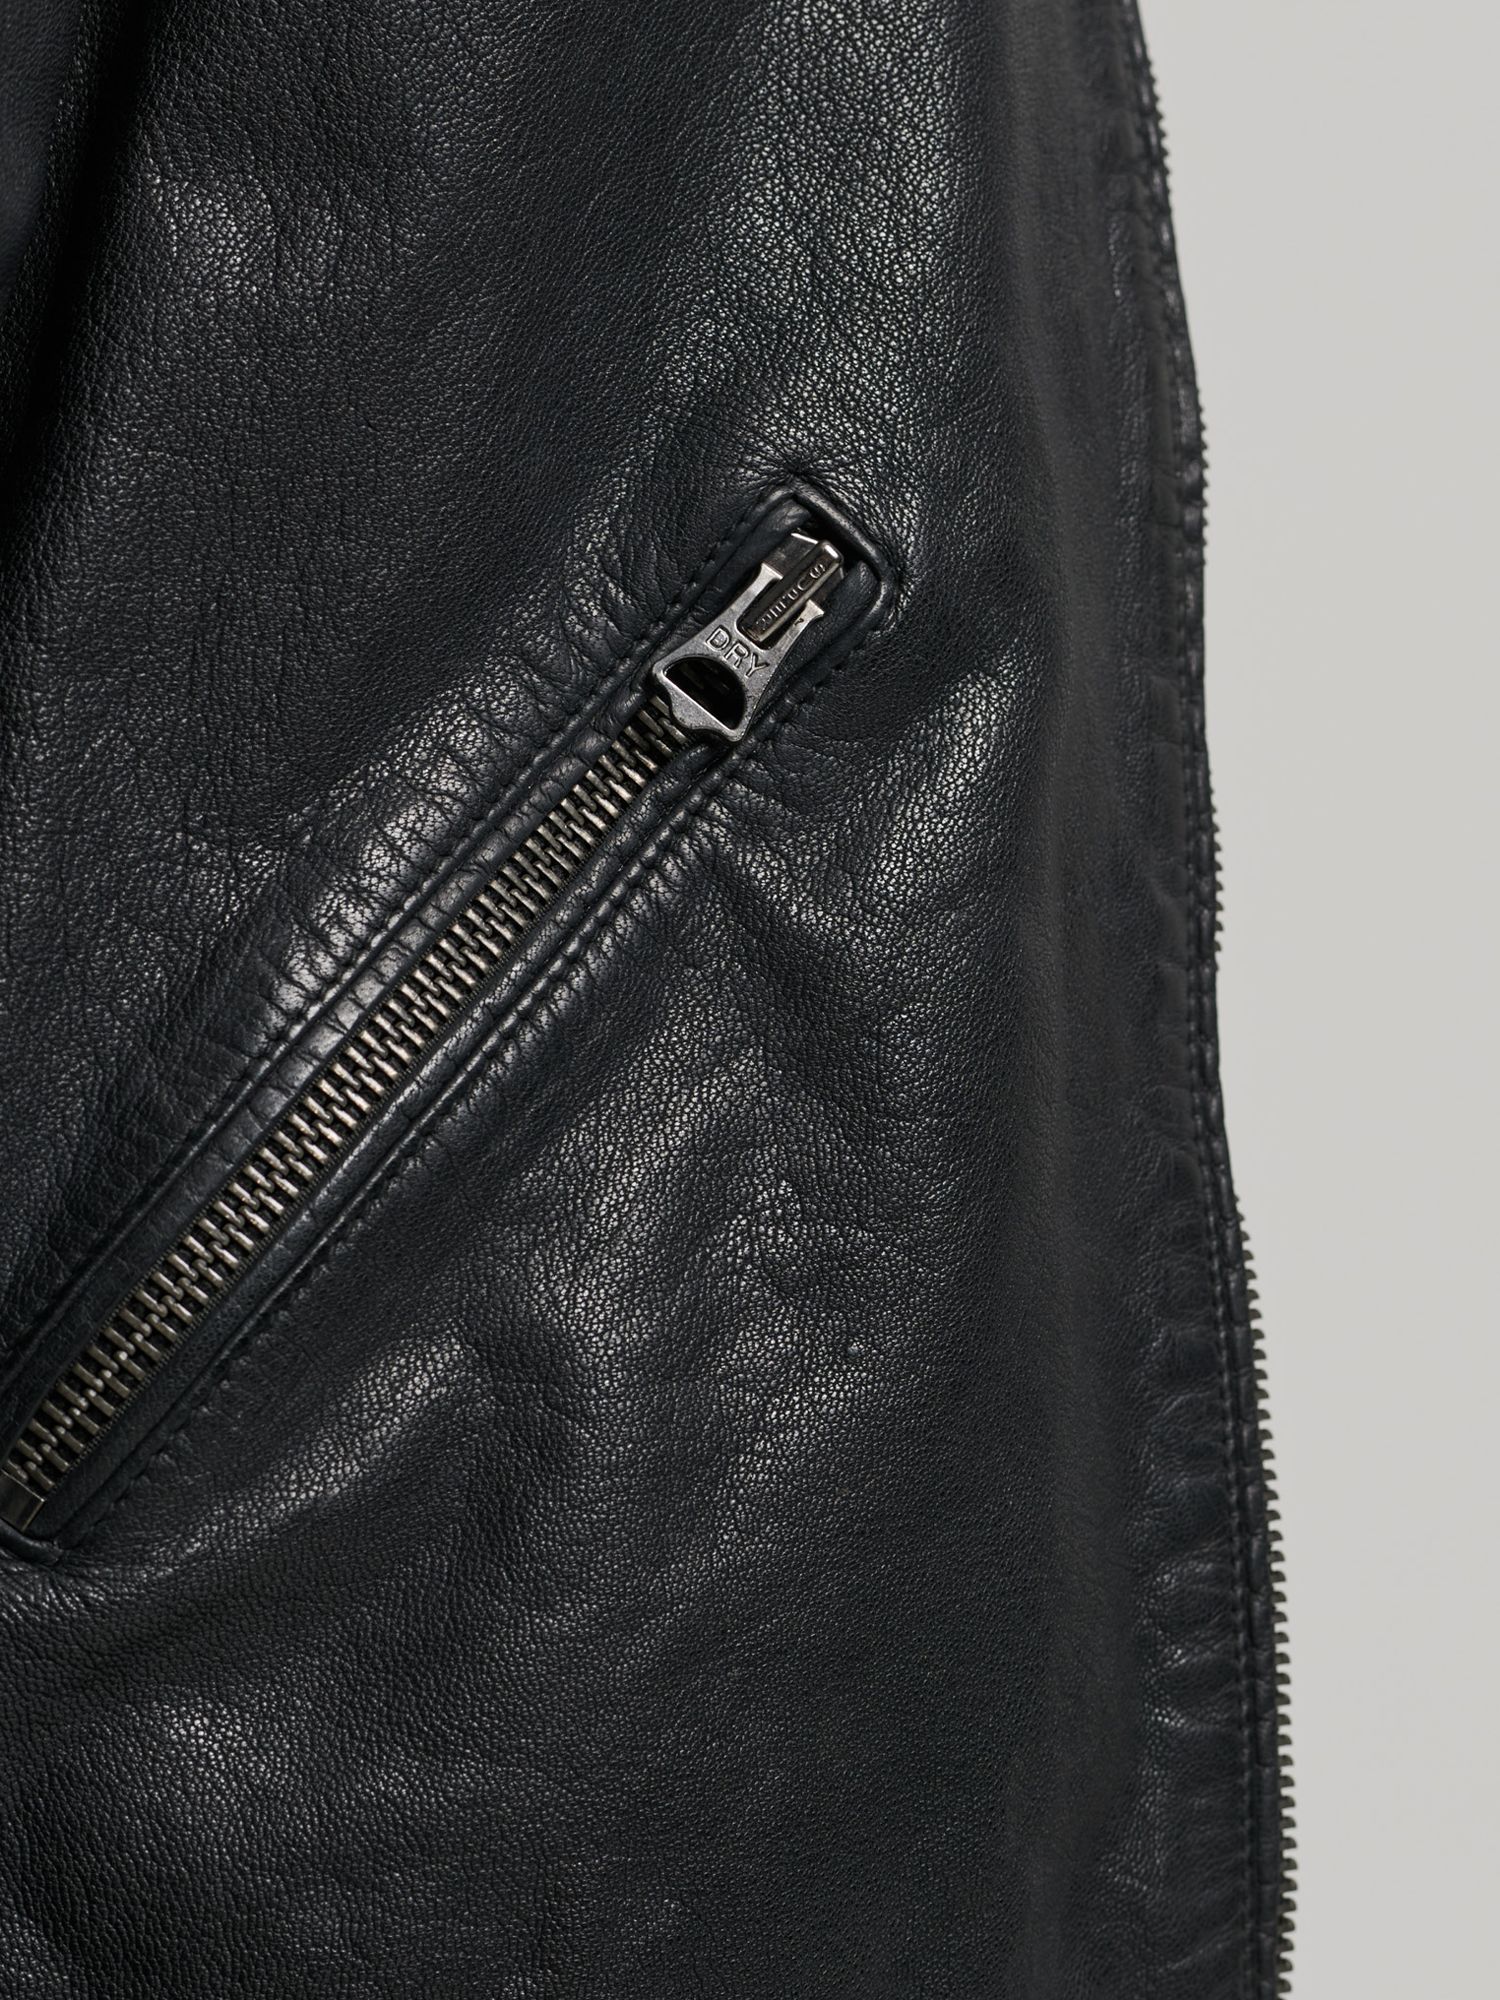 Men's - Heritage Sports Racer Leather Jacket in Black